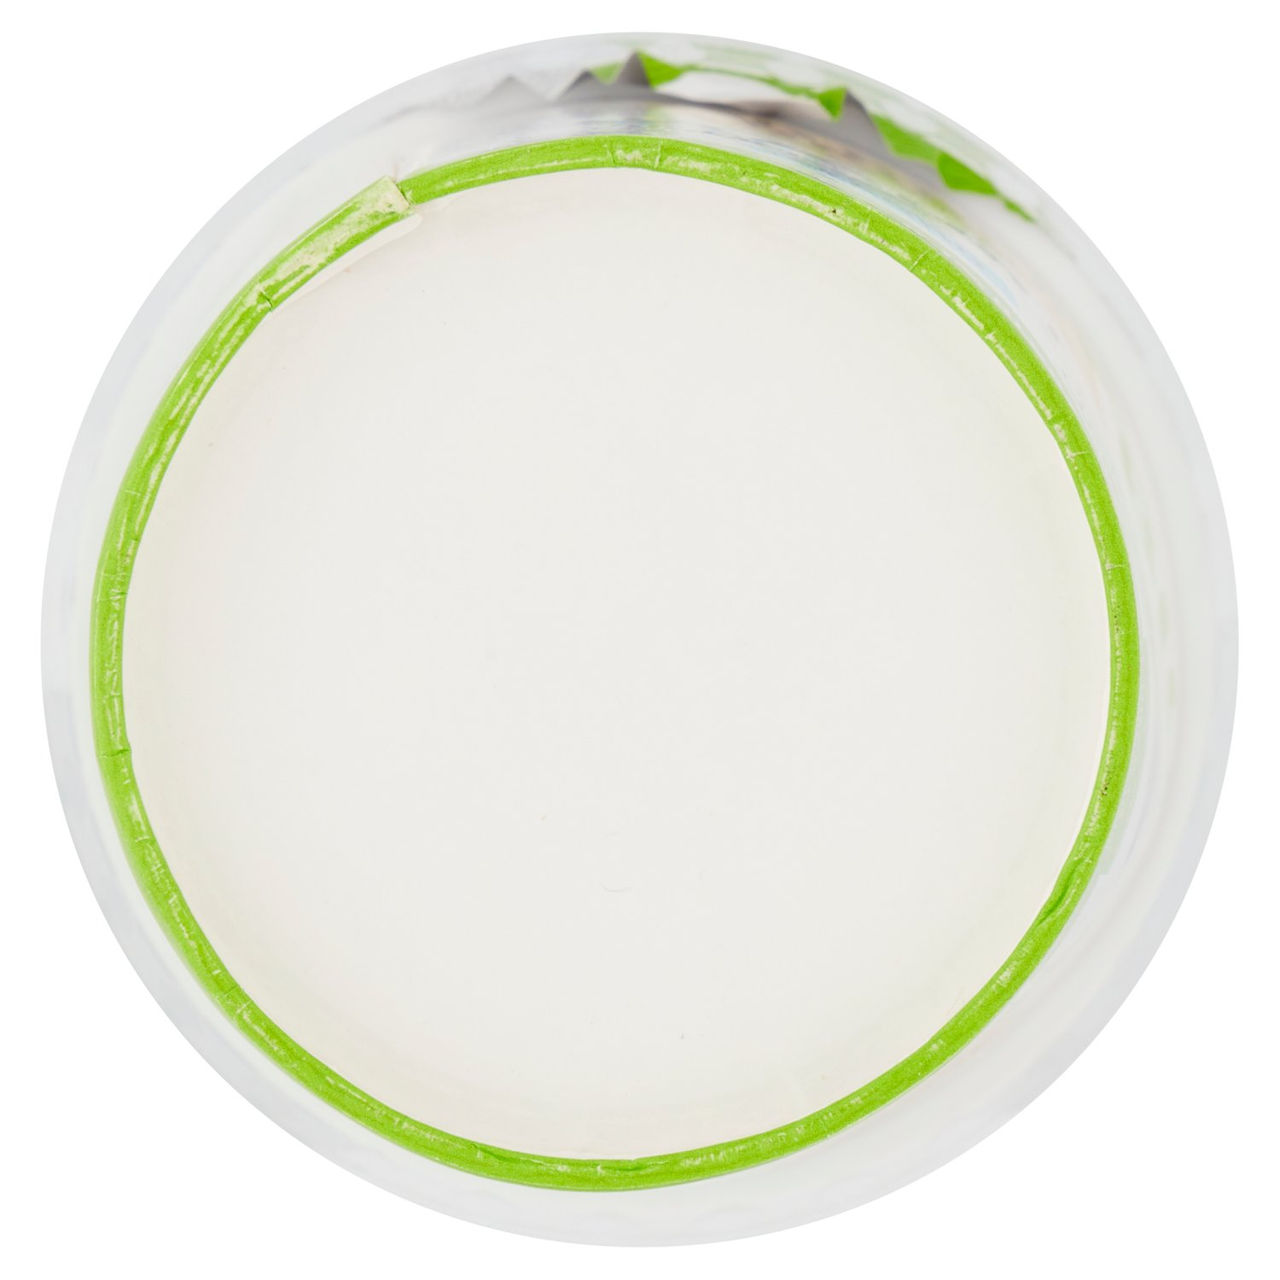 Yogurt Bianco Magro Biologico g 500 Conad